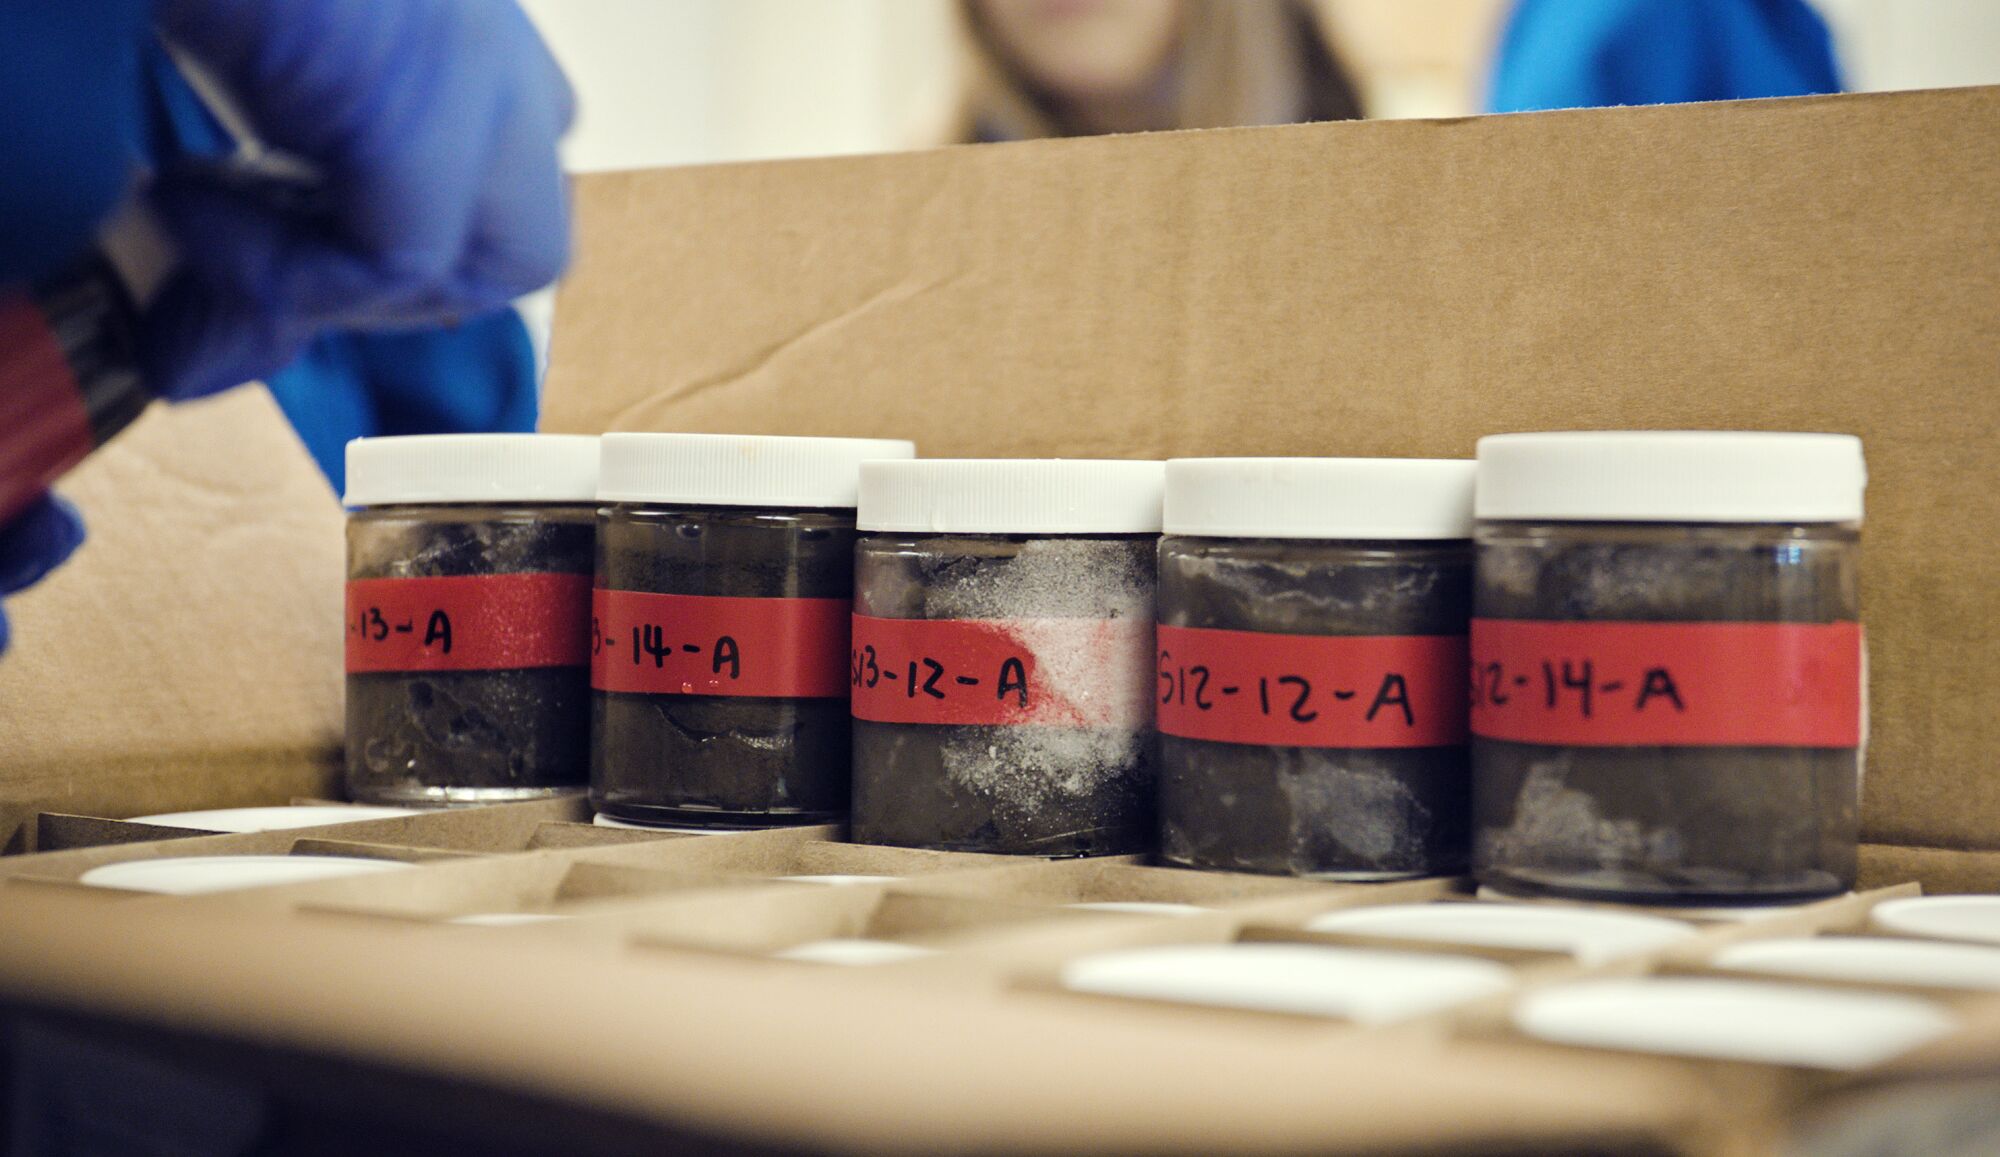 Seafloor samples are organized into multiple jars in David Valentine's lab.